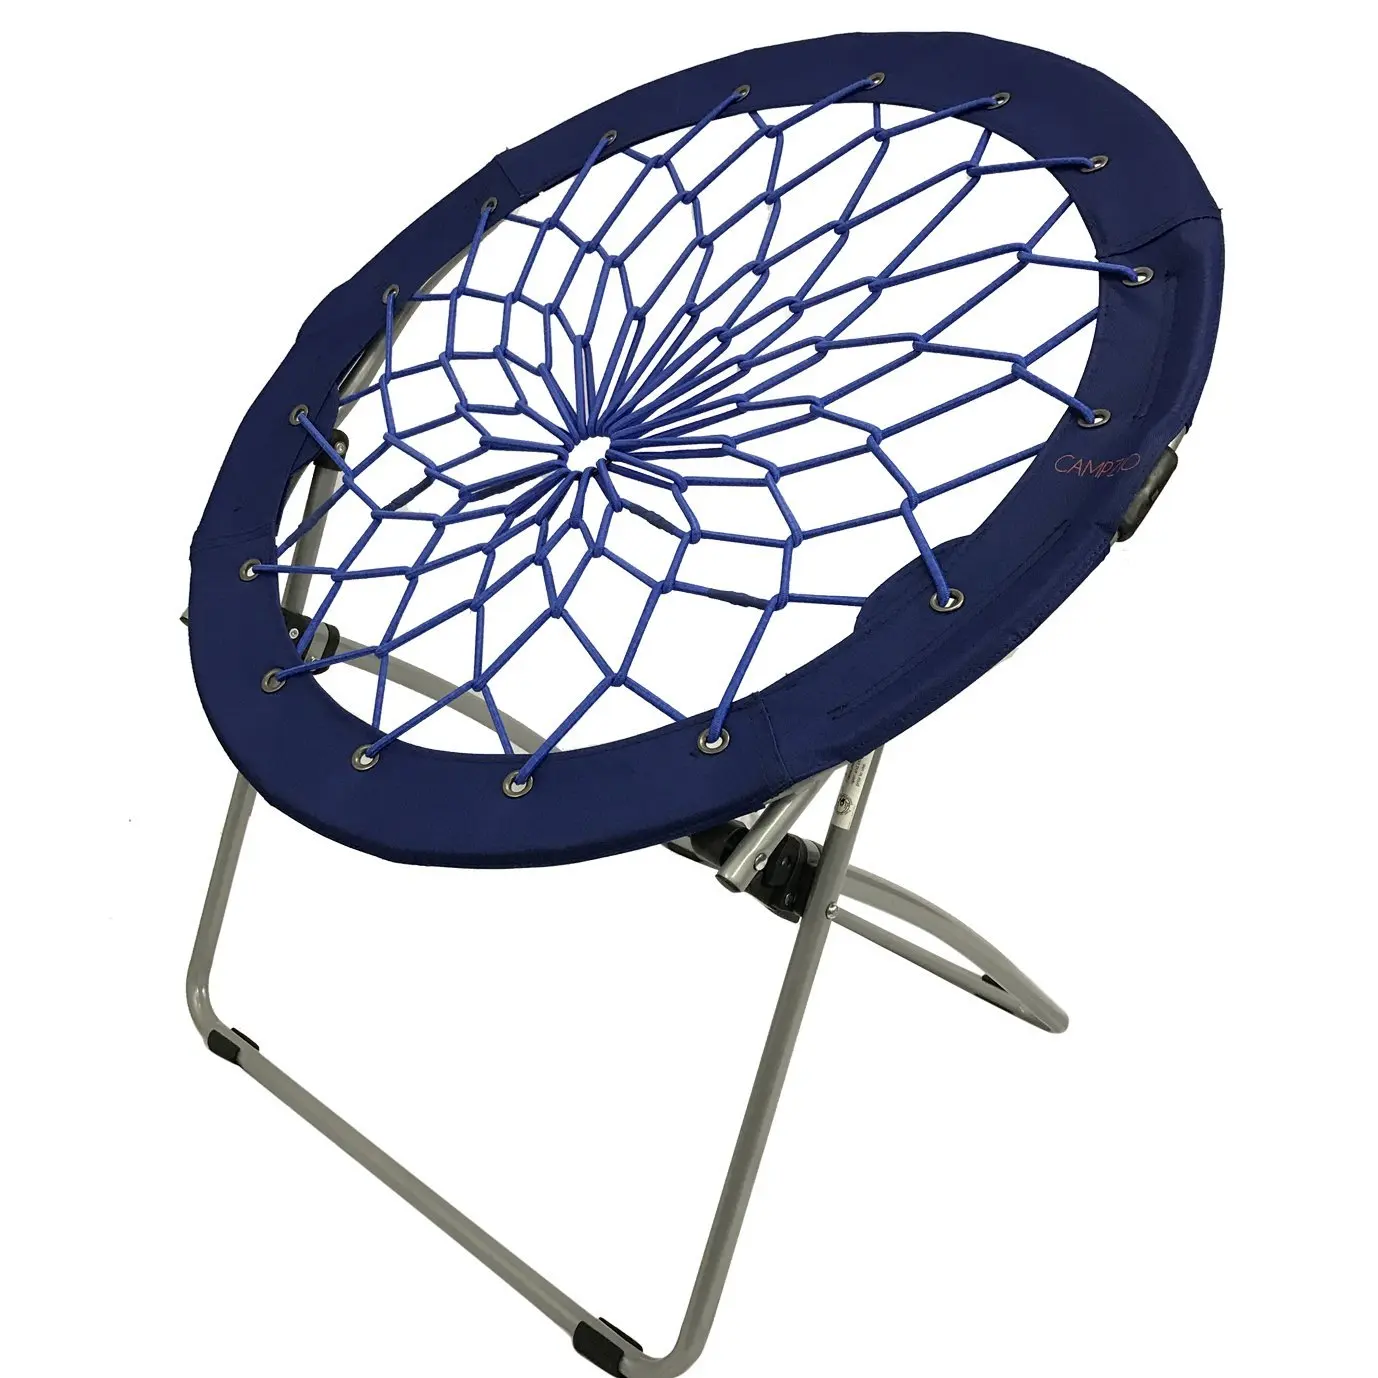 CAMPZIO Bungee Chair Round Bungee Chair Folding Comfortable Lightweight Por...